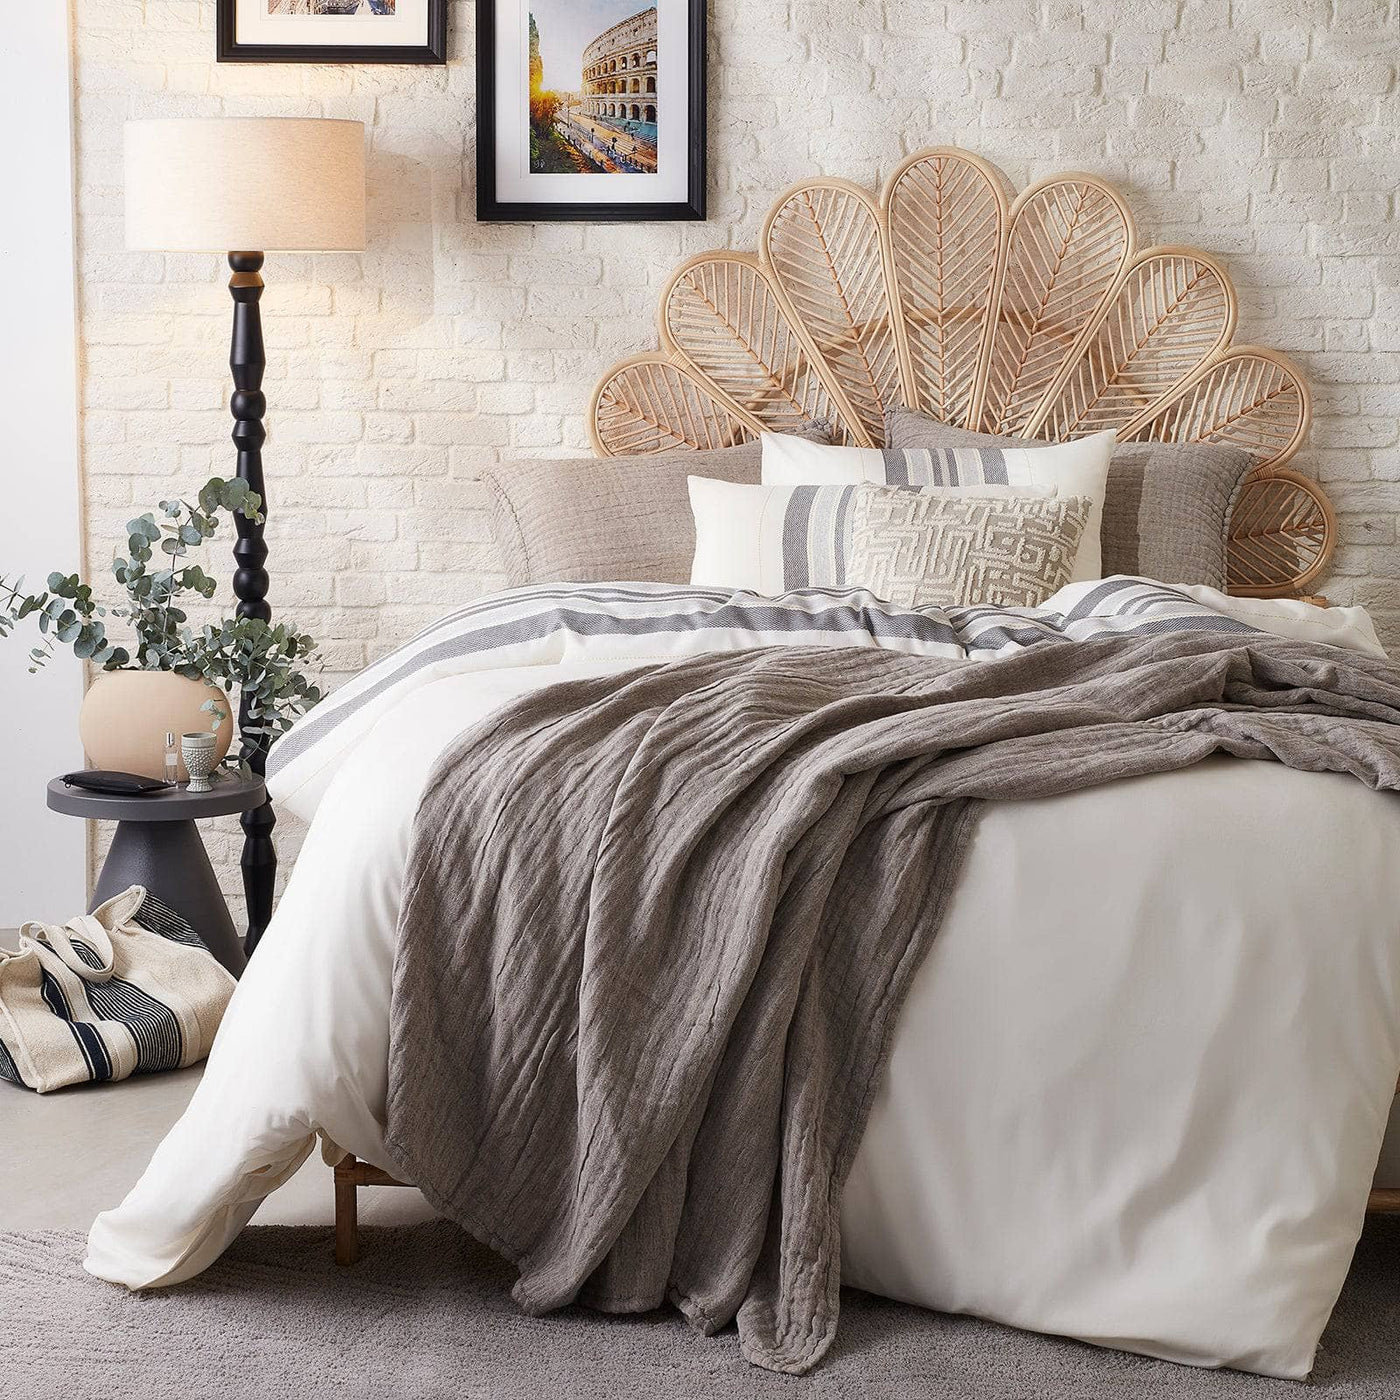 Cara Striped Turkish Cotton Duvet Cover Set + Fitted Sheet, Off-White - Anthracite Grey, Super King Size Bedding Sets sazy.com